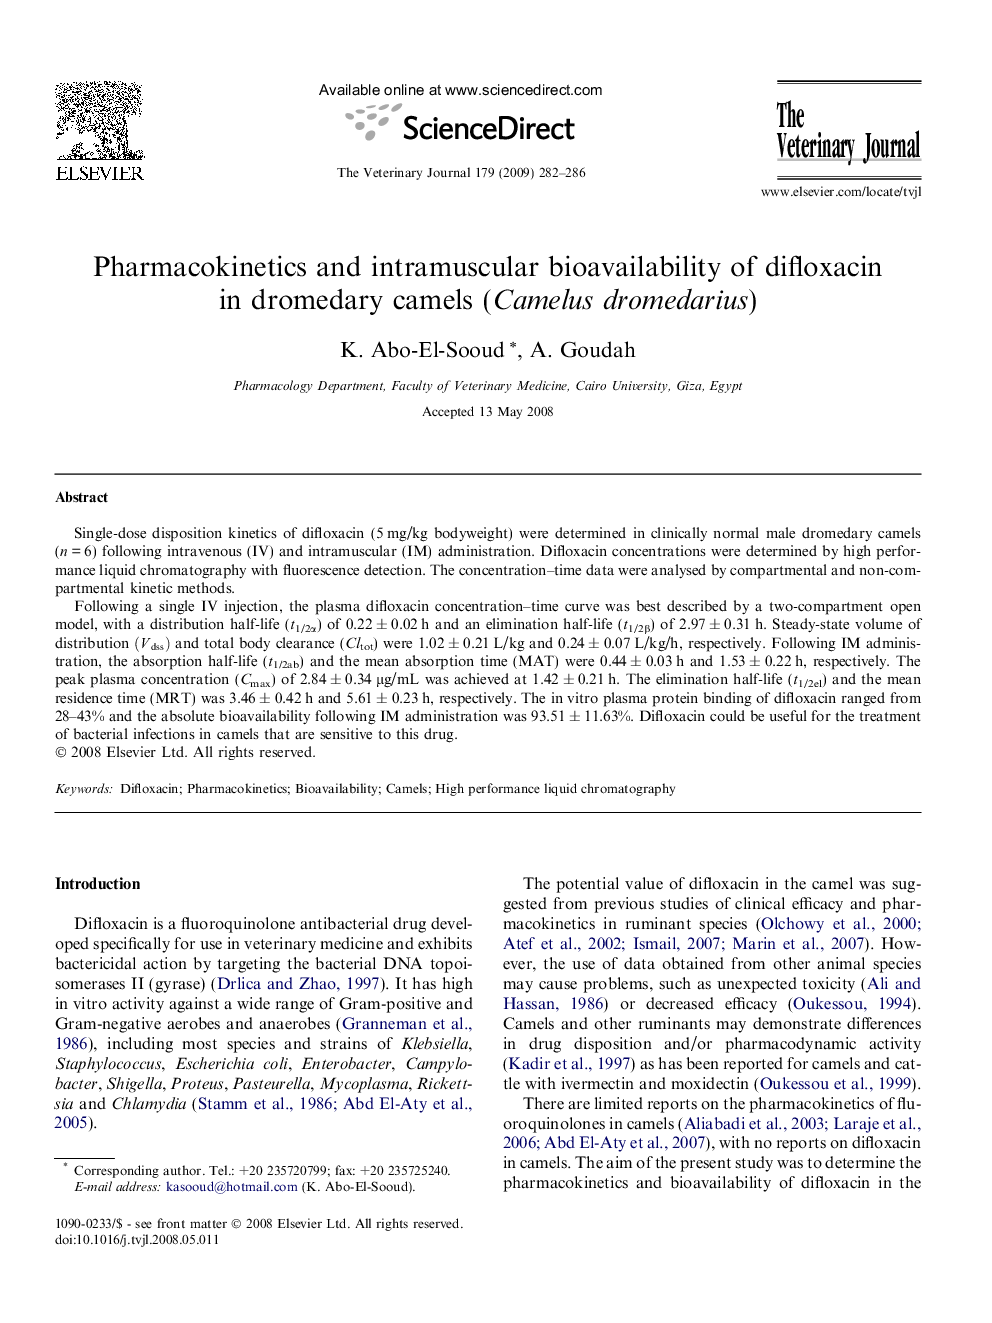 Pharmacokinetics and intramuscular bioavailability of difloxacin in dromedary camels (Camelus dromedarius)